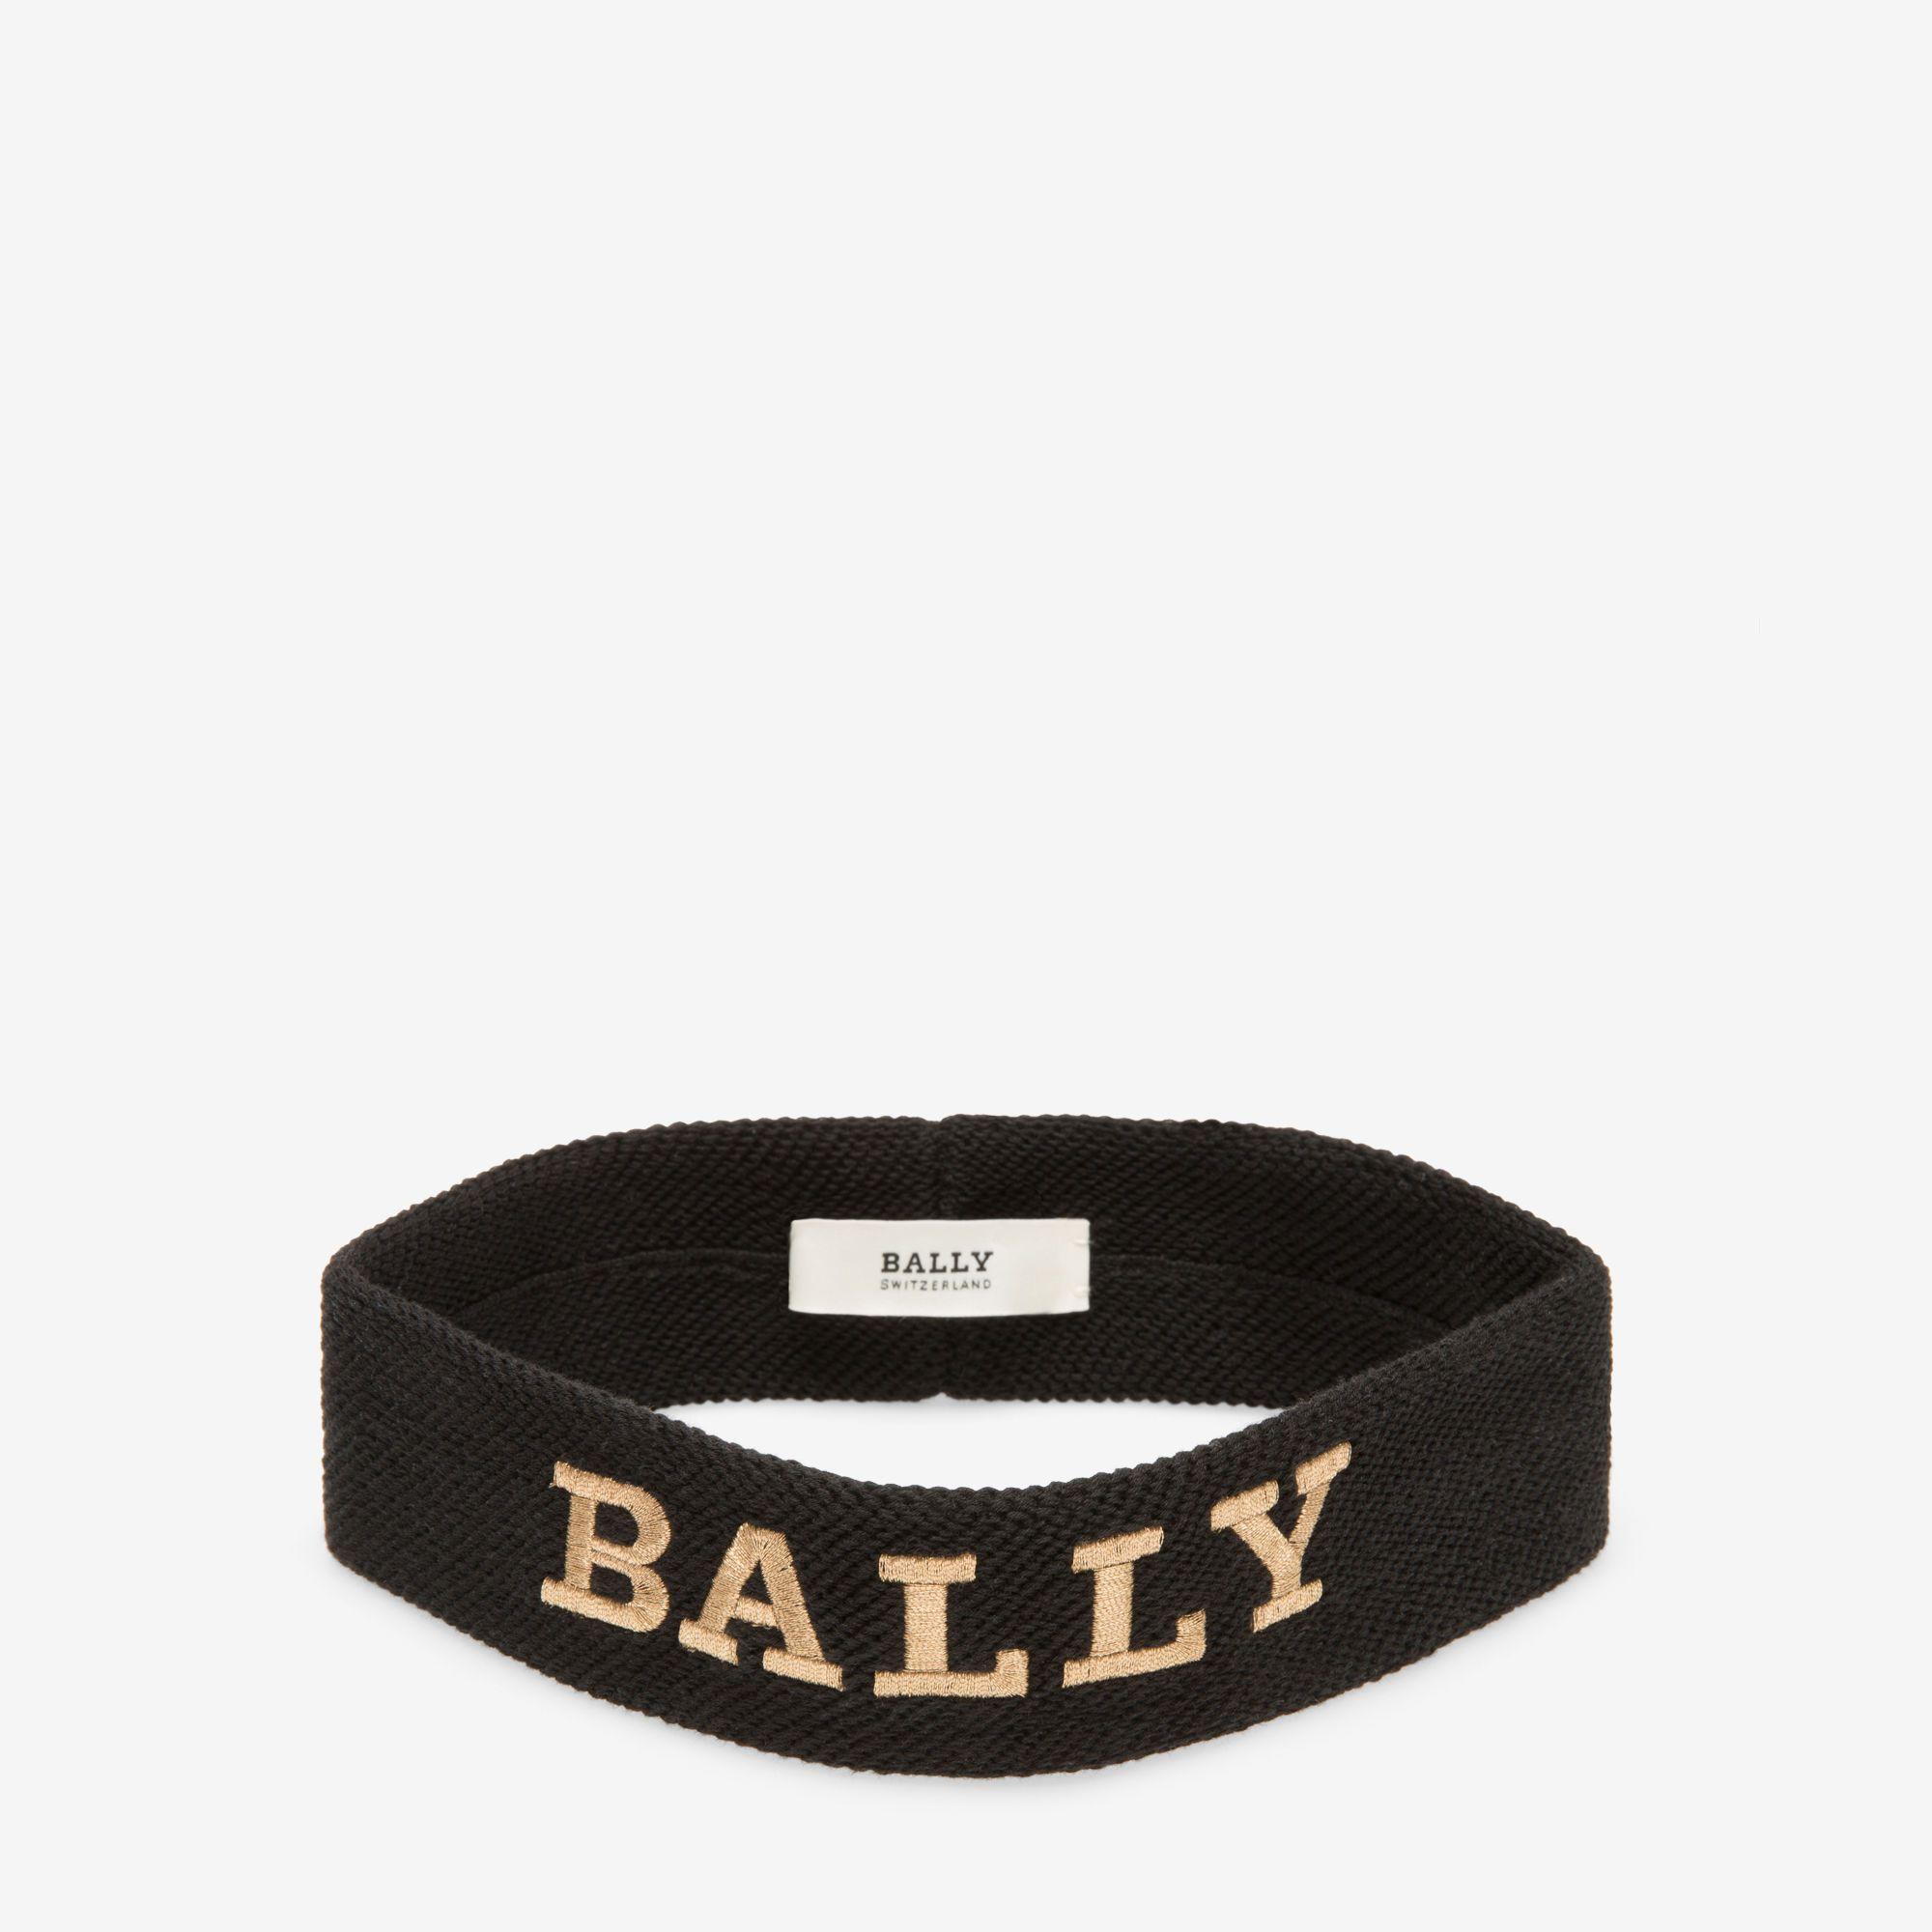 Bally Switzerland Logo - BALLY HEAD BAND| Men's Hats | Bally Animals Collection